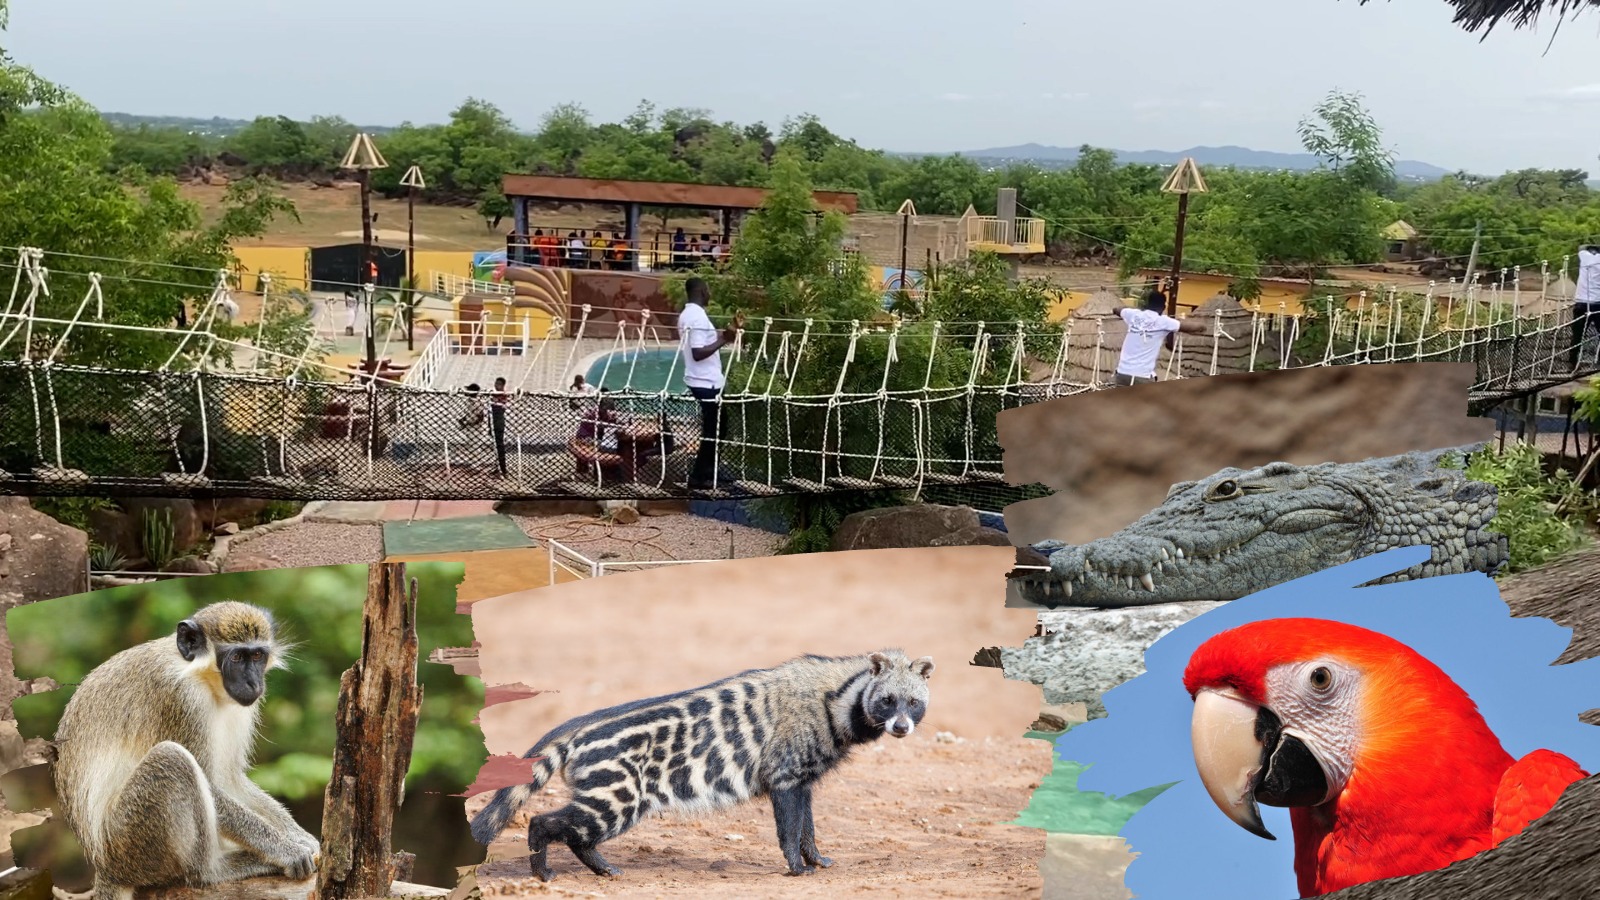 Rock Gardens: A top tourist attraction in Ghana’s Upper East Region